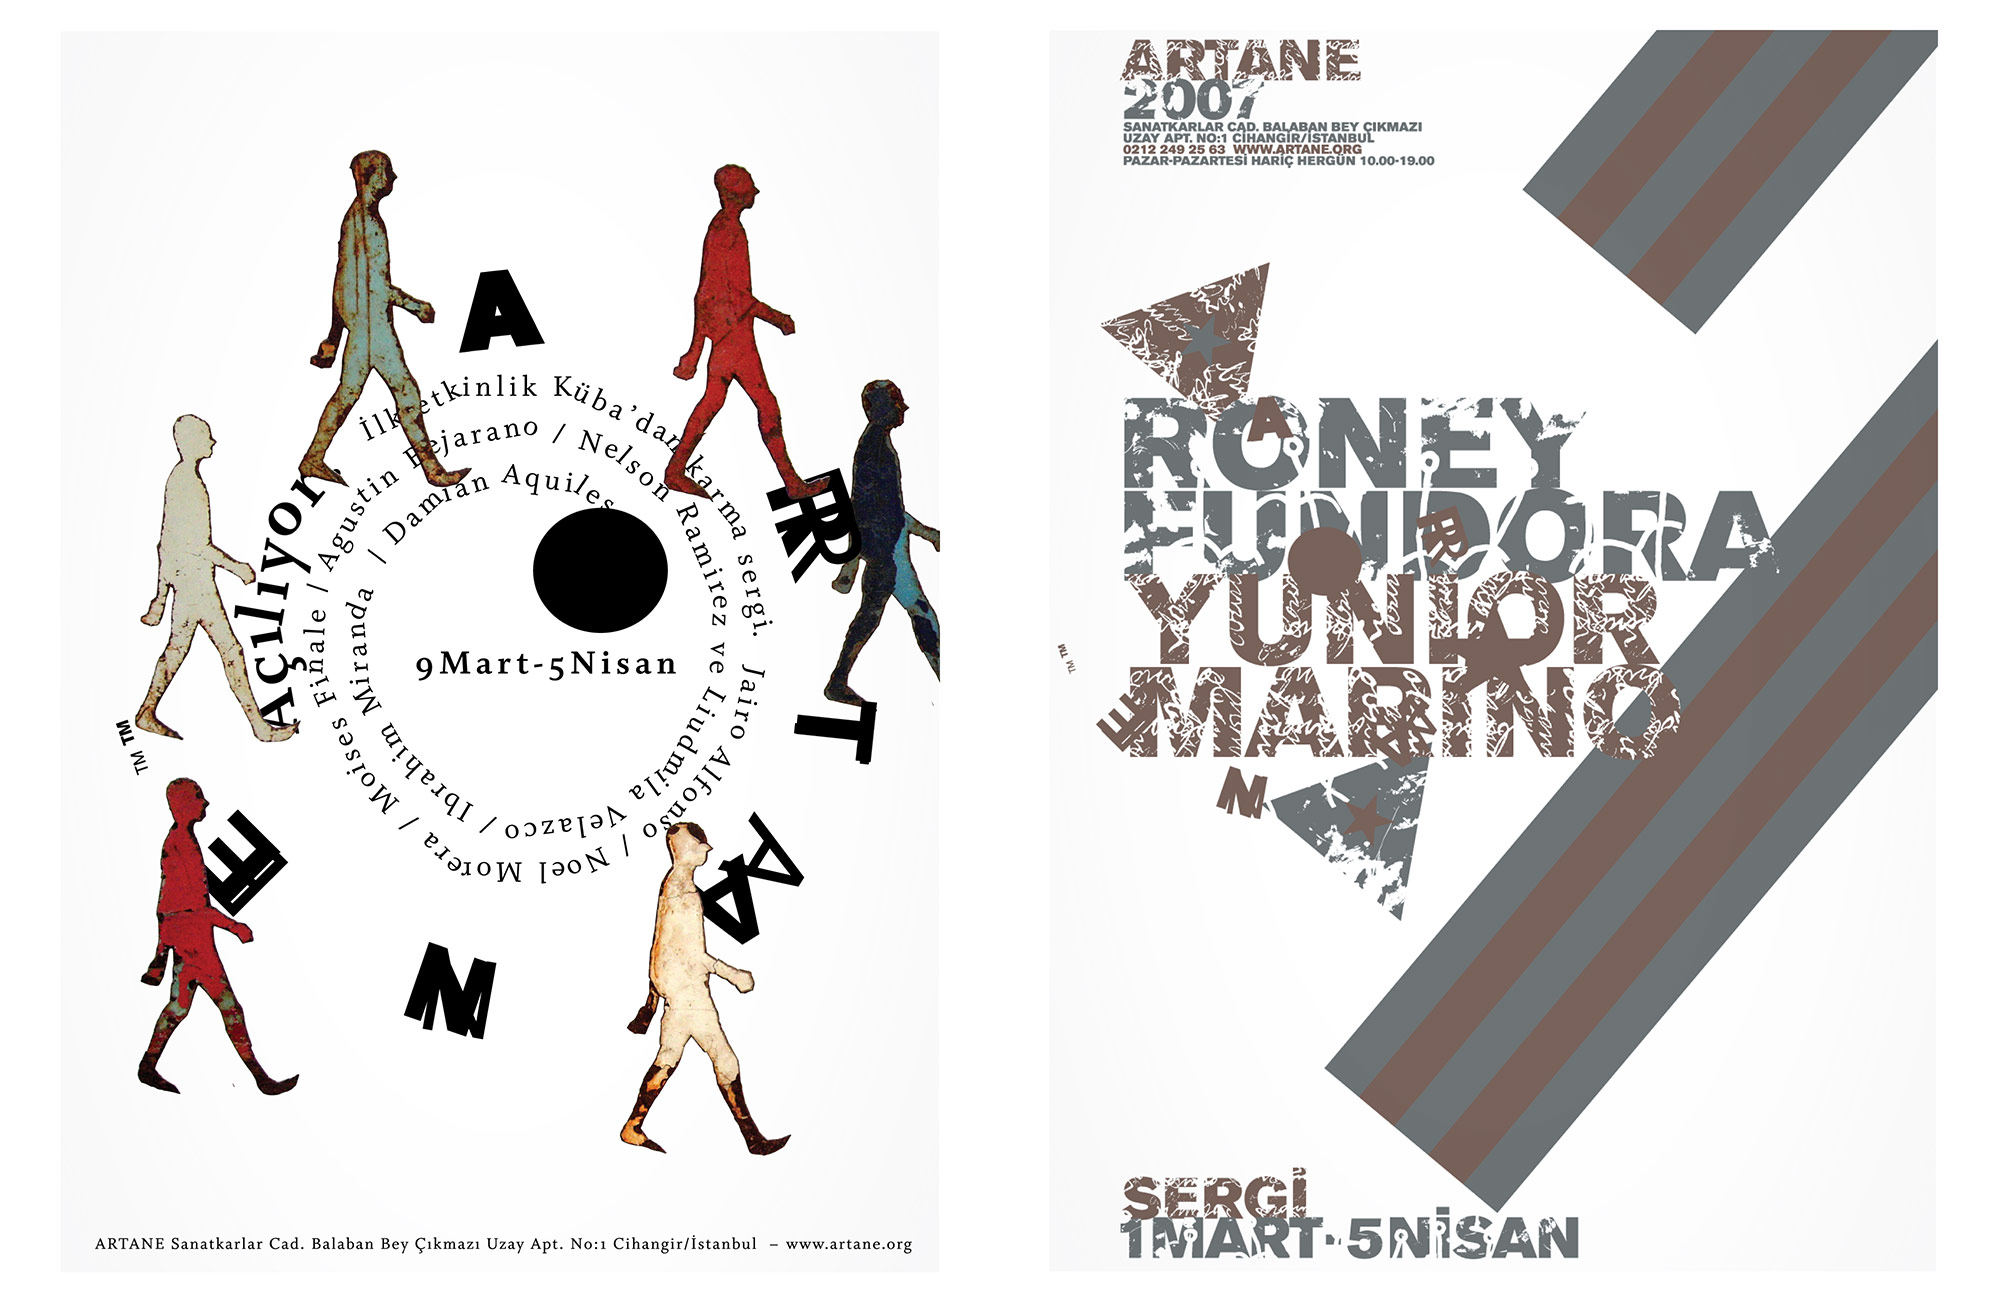 ARTANE Exhibition Posters